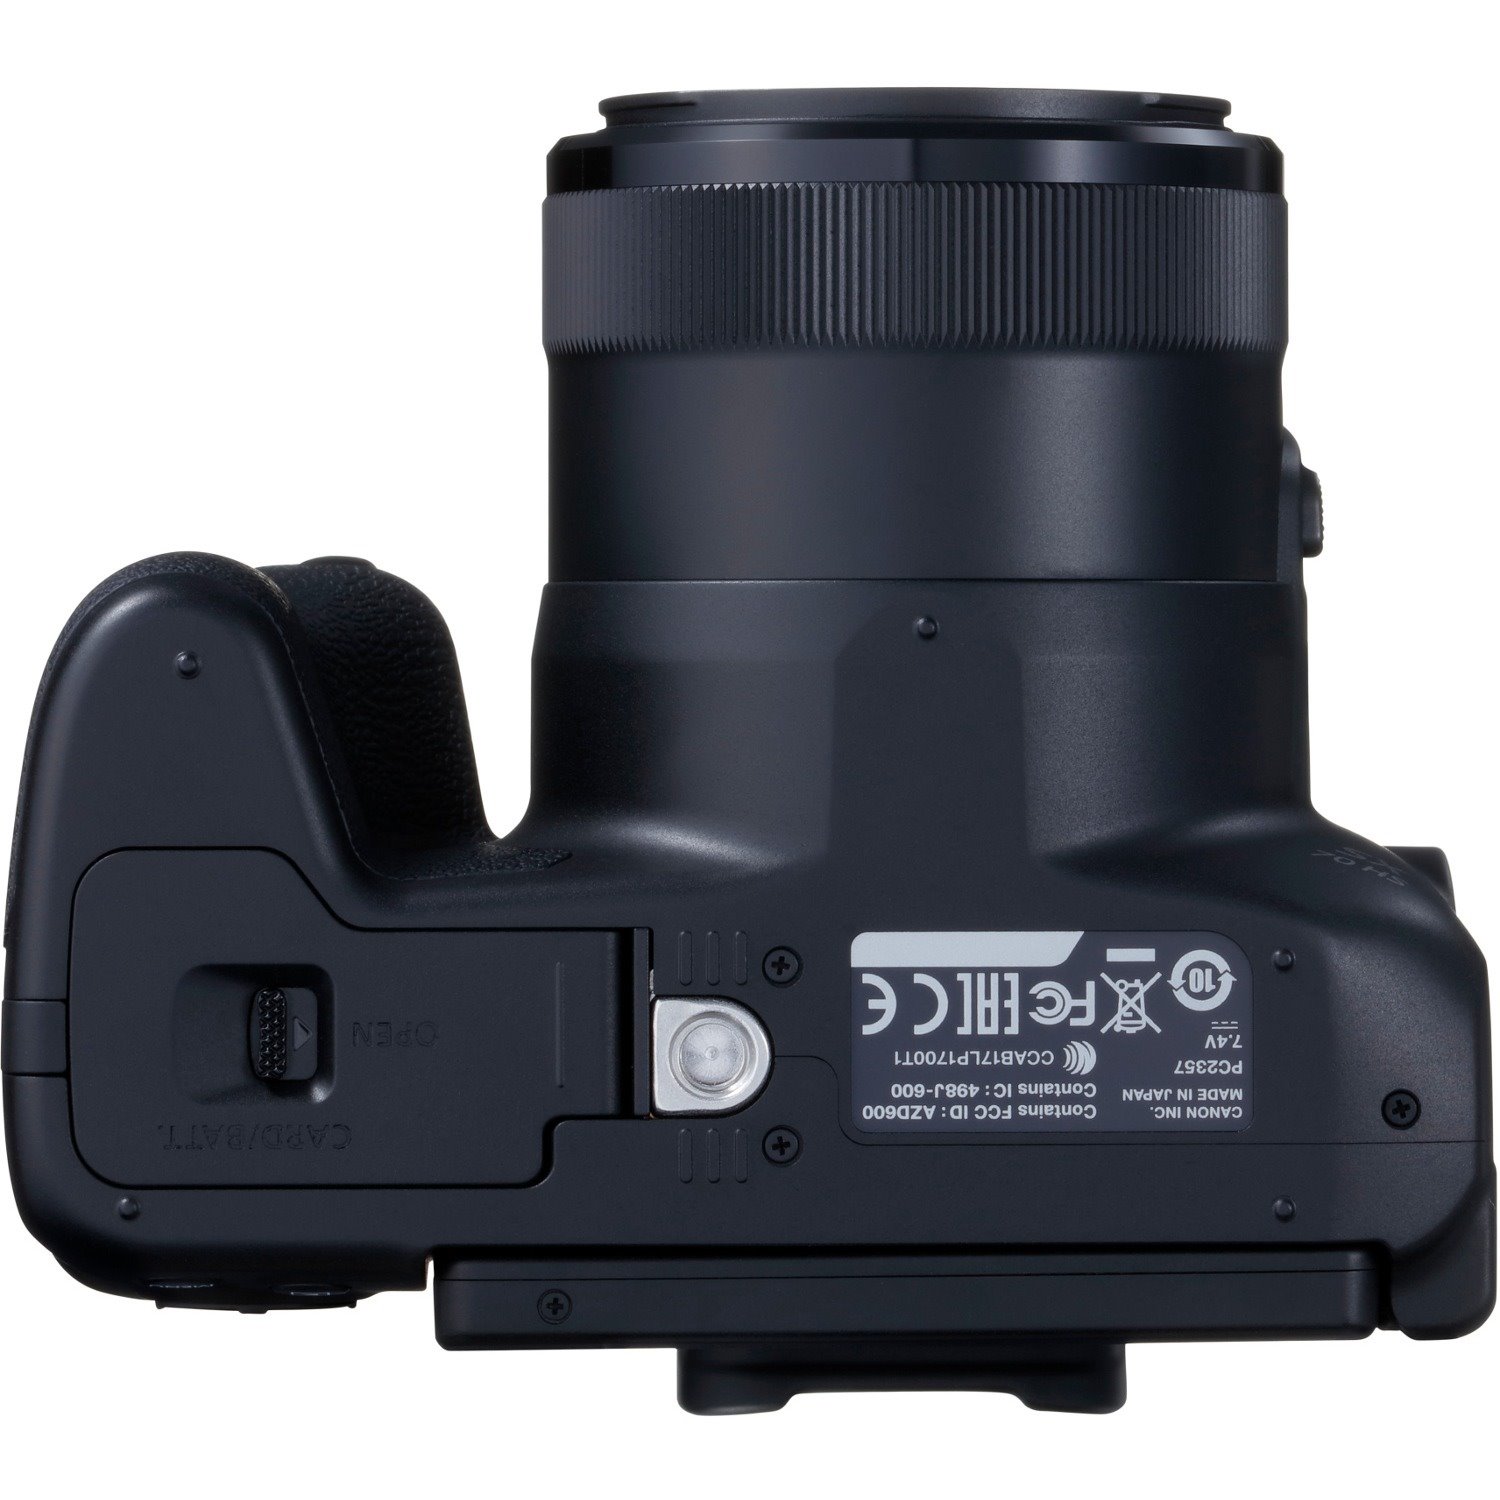 Canon PowerShot SX70 HS 20.3 Megapixel Bridge Camera - Black